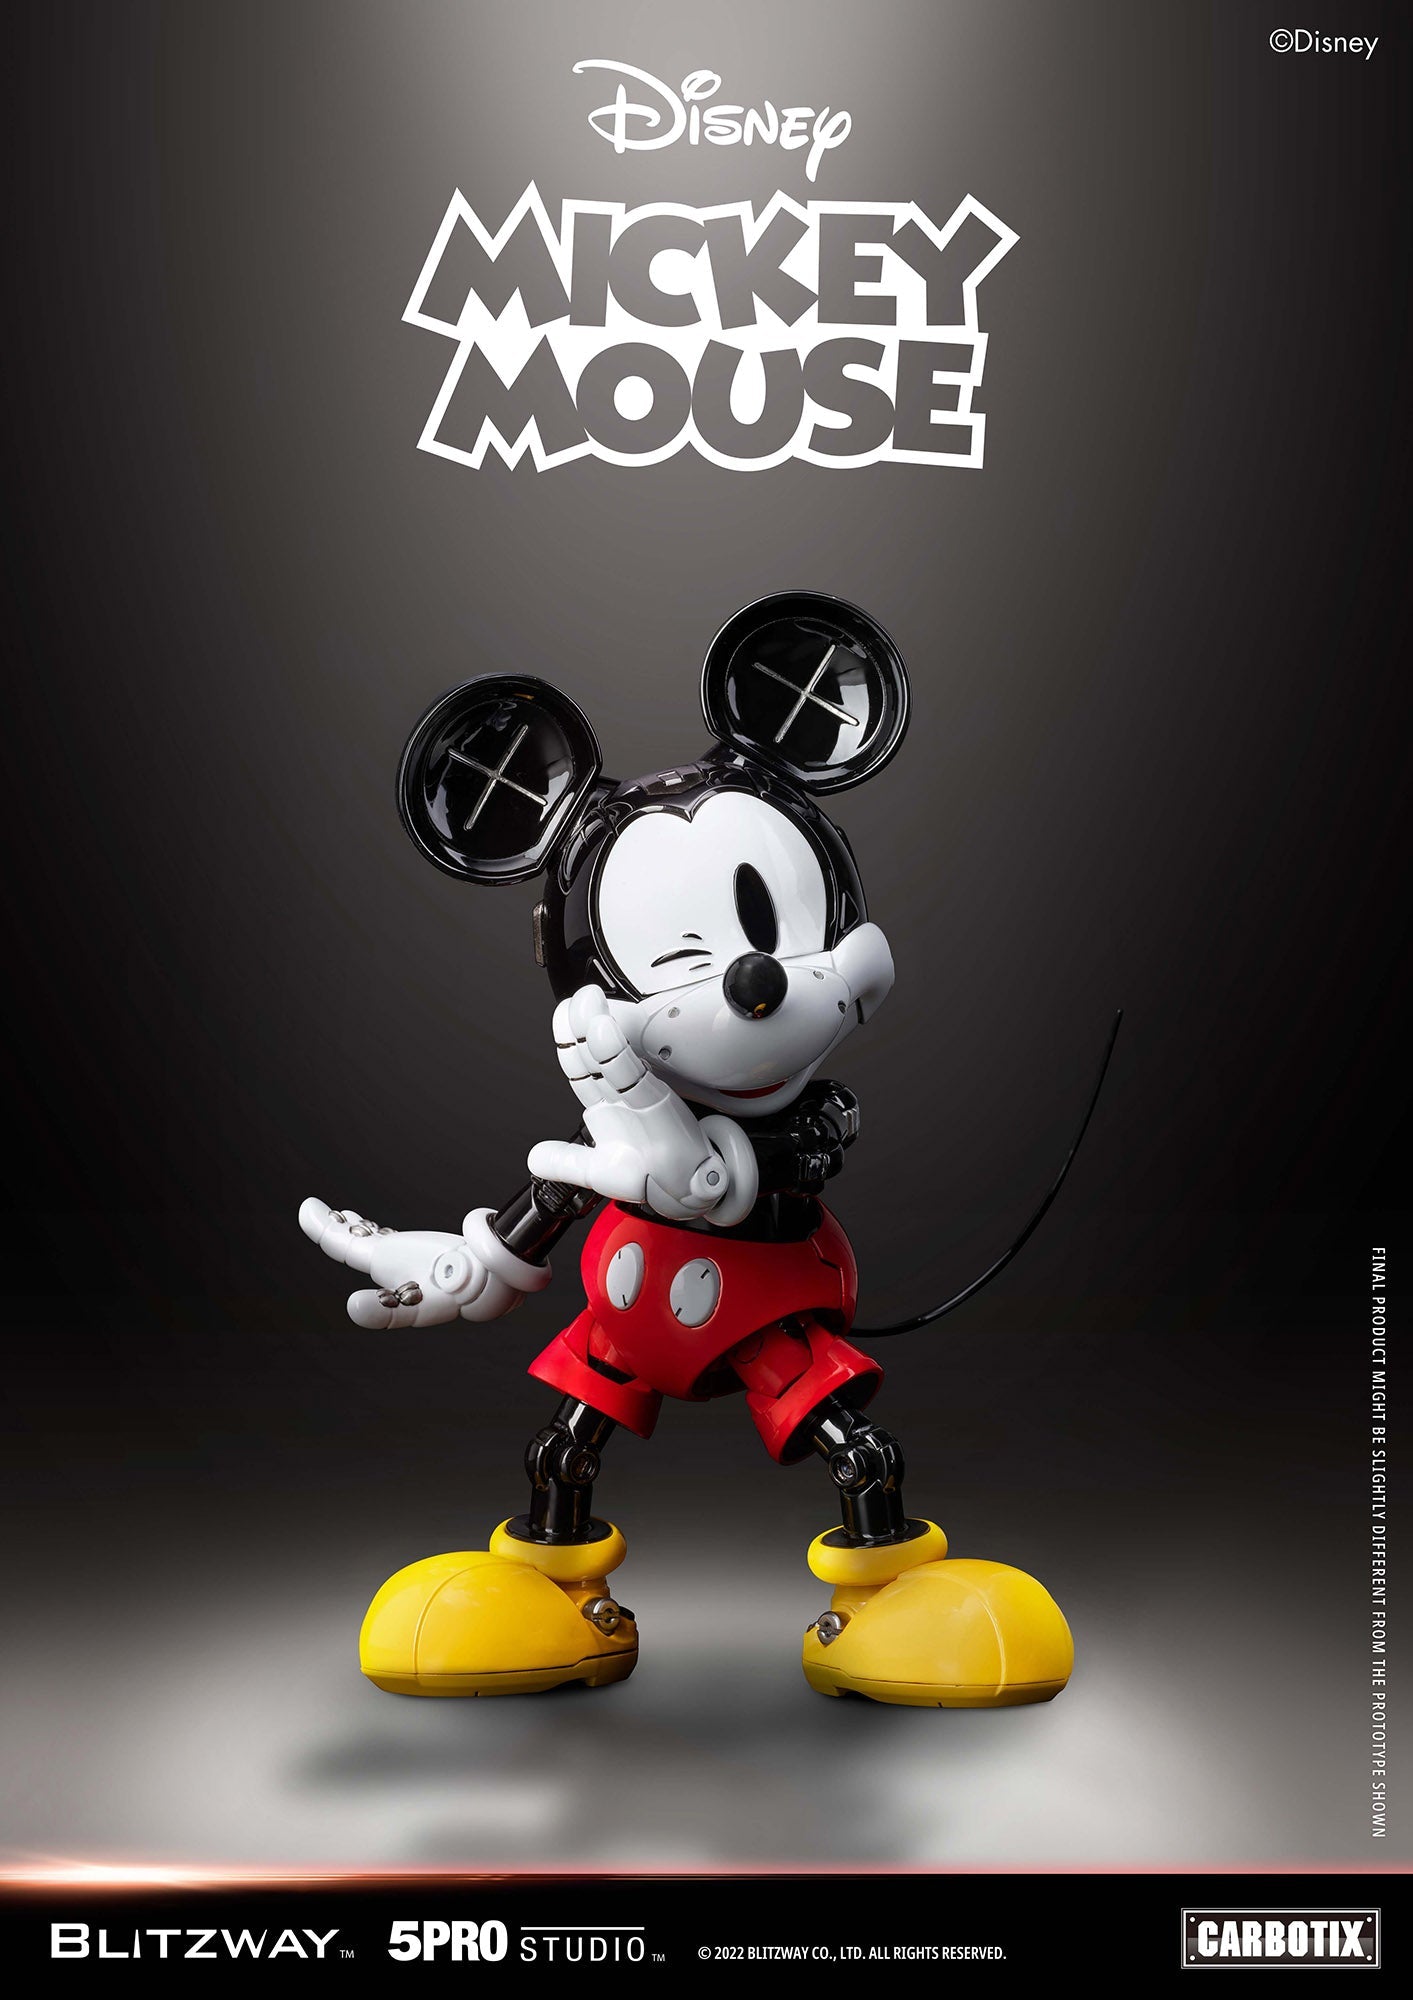 Blitzway x 5Pro Studio - Carbotix Series - Disney&#39;s Mickey Mouse - Marvelous Toys